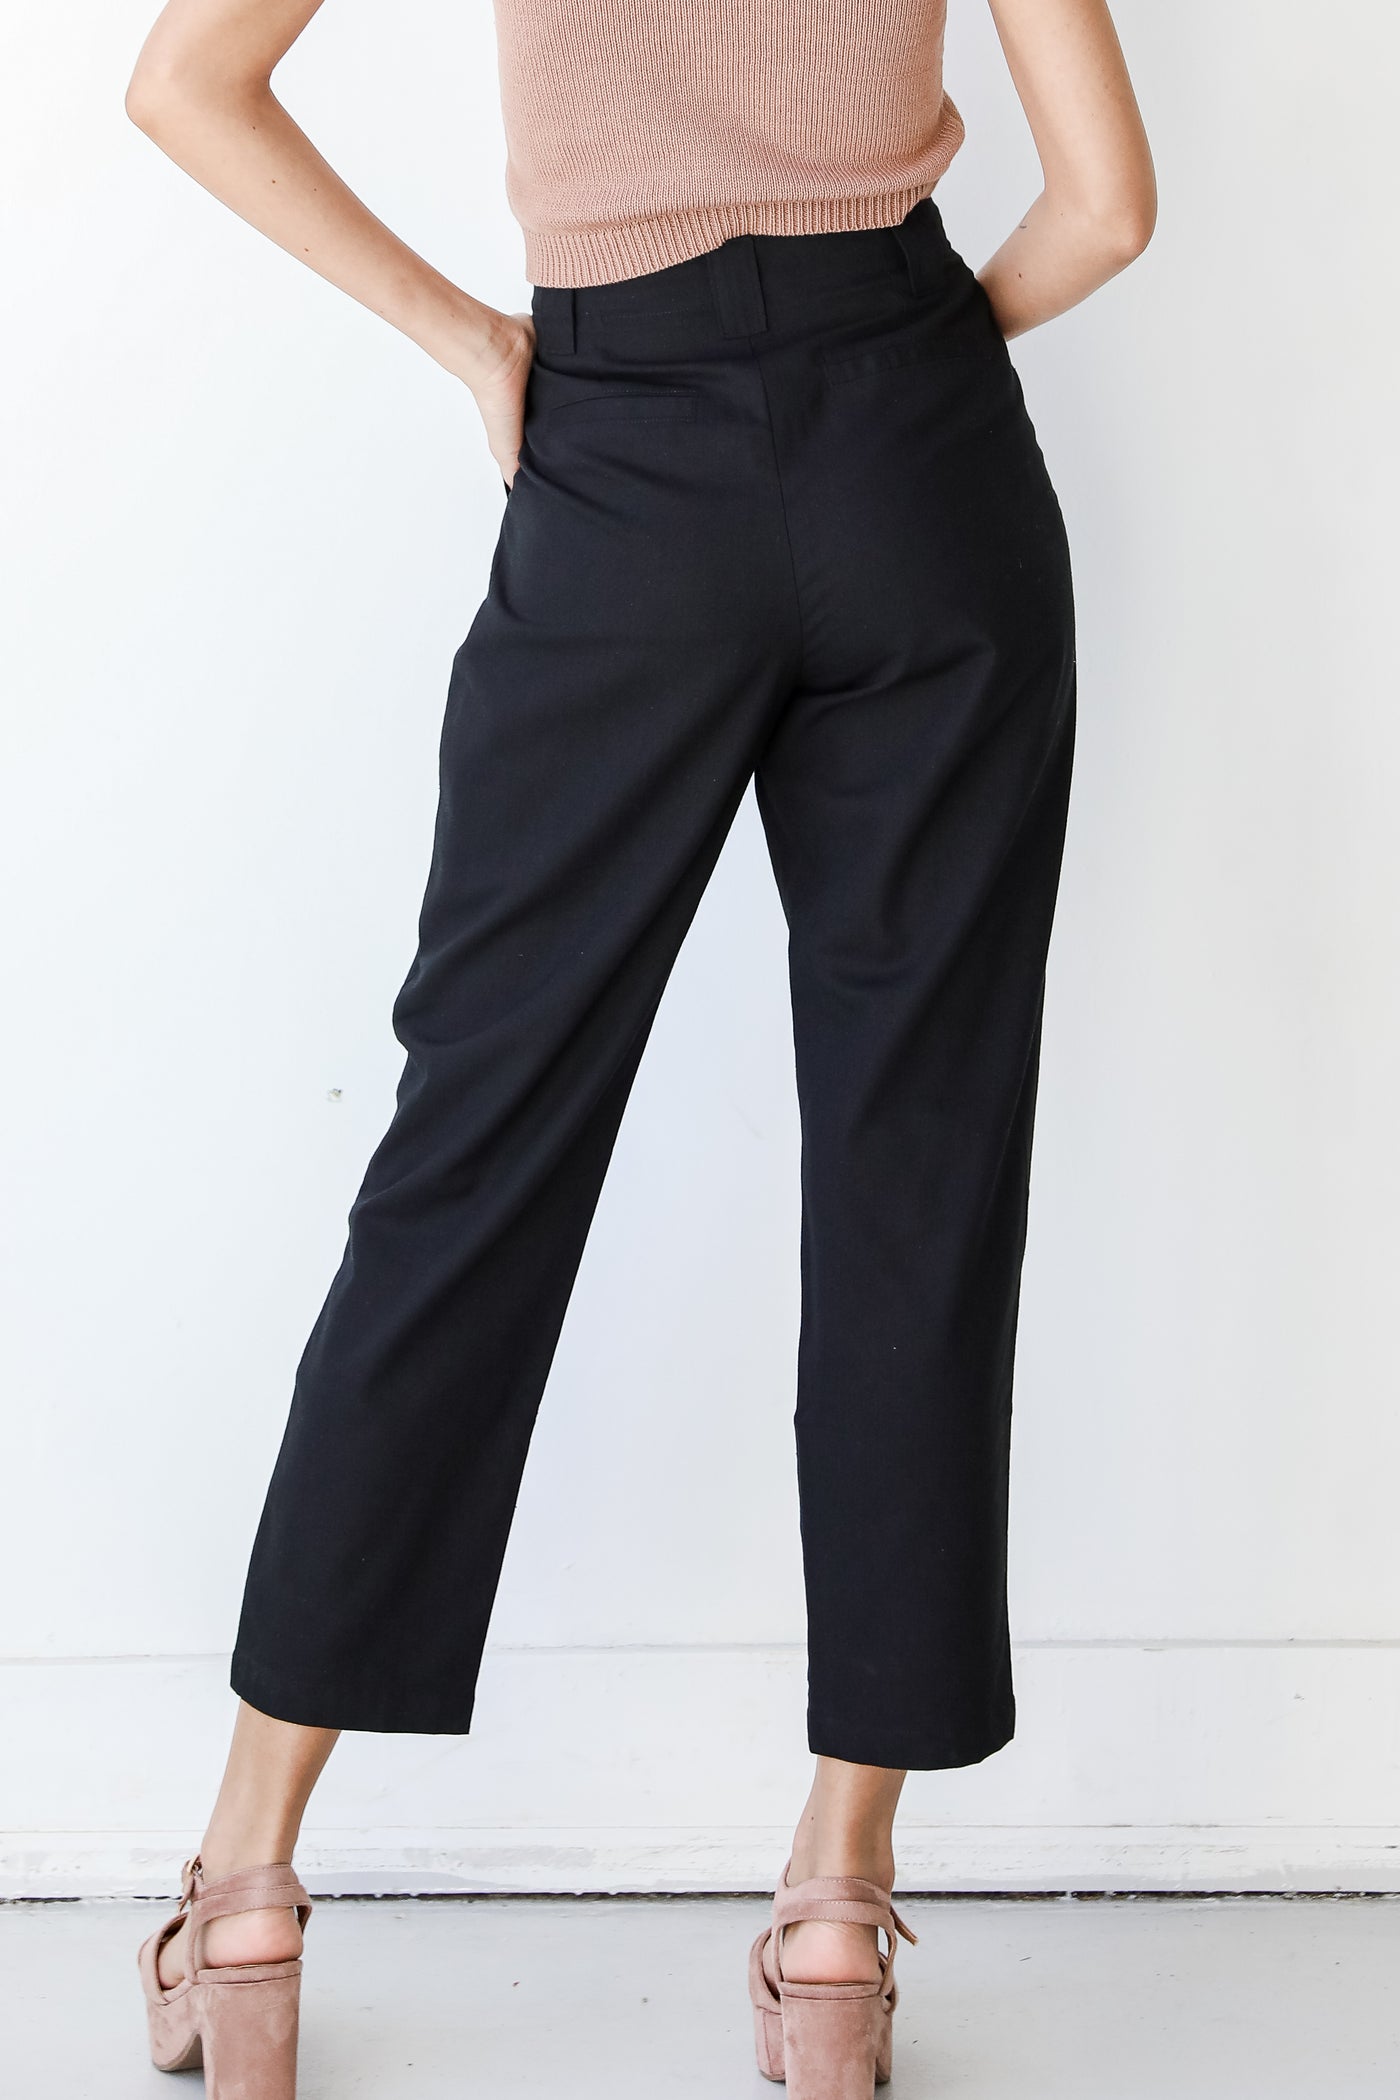 Linen Pants in black back view